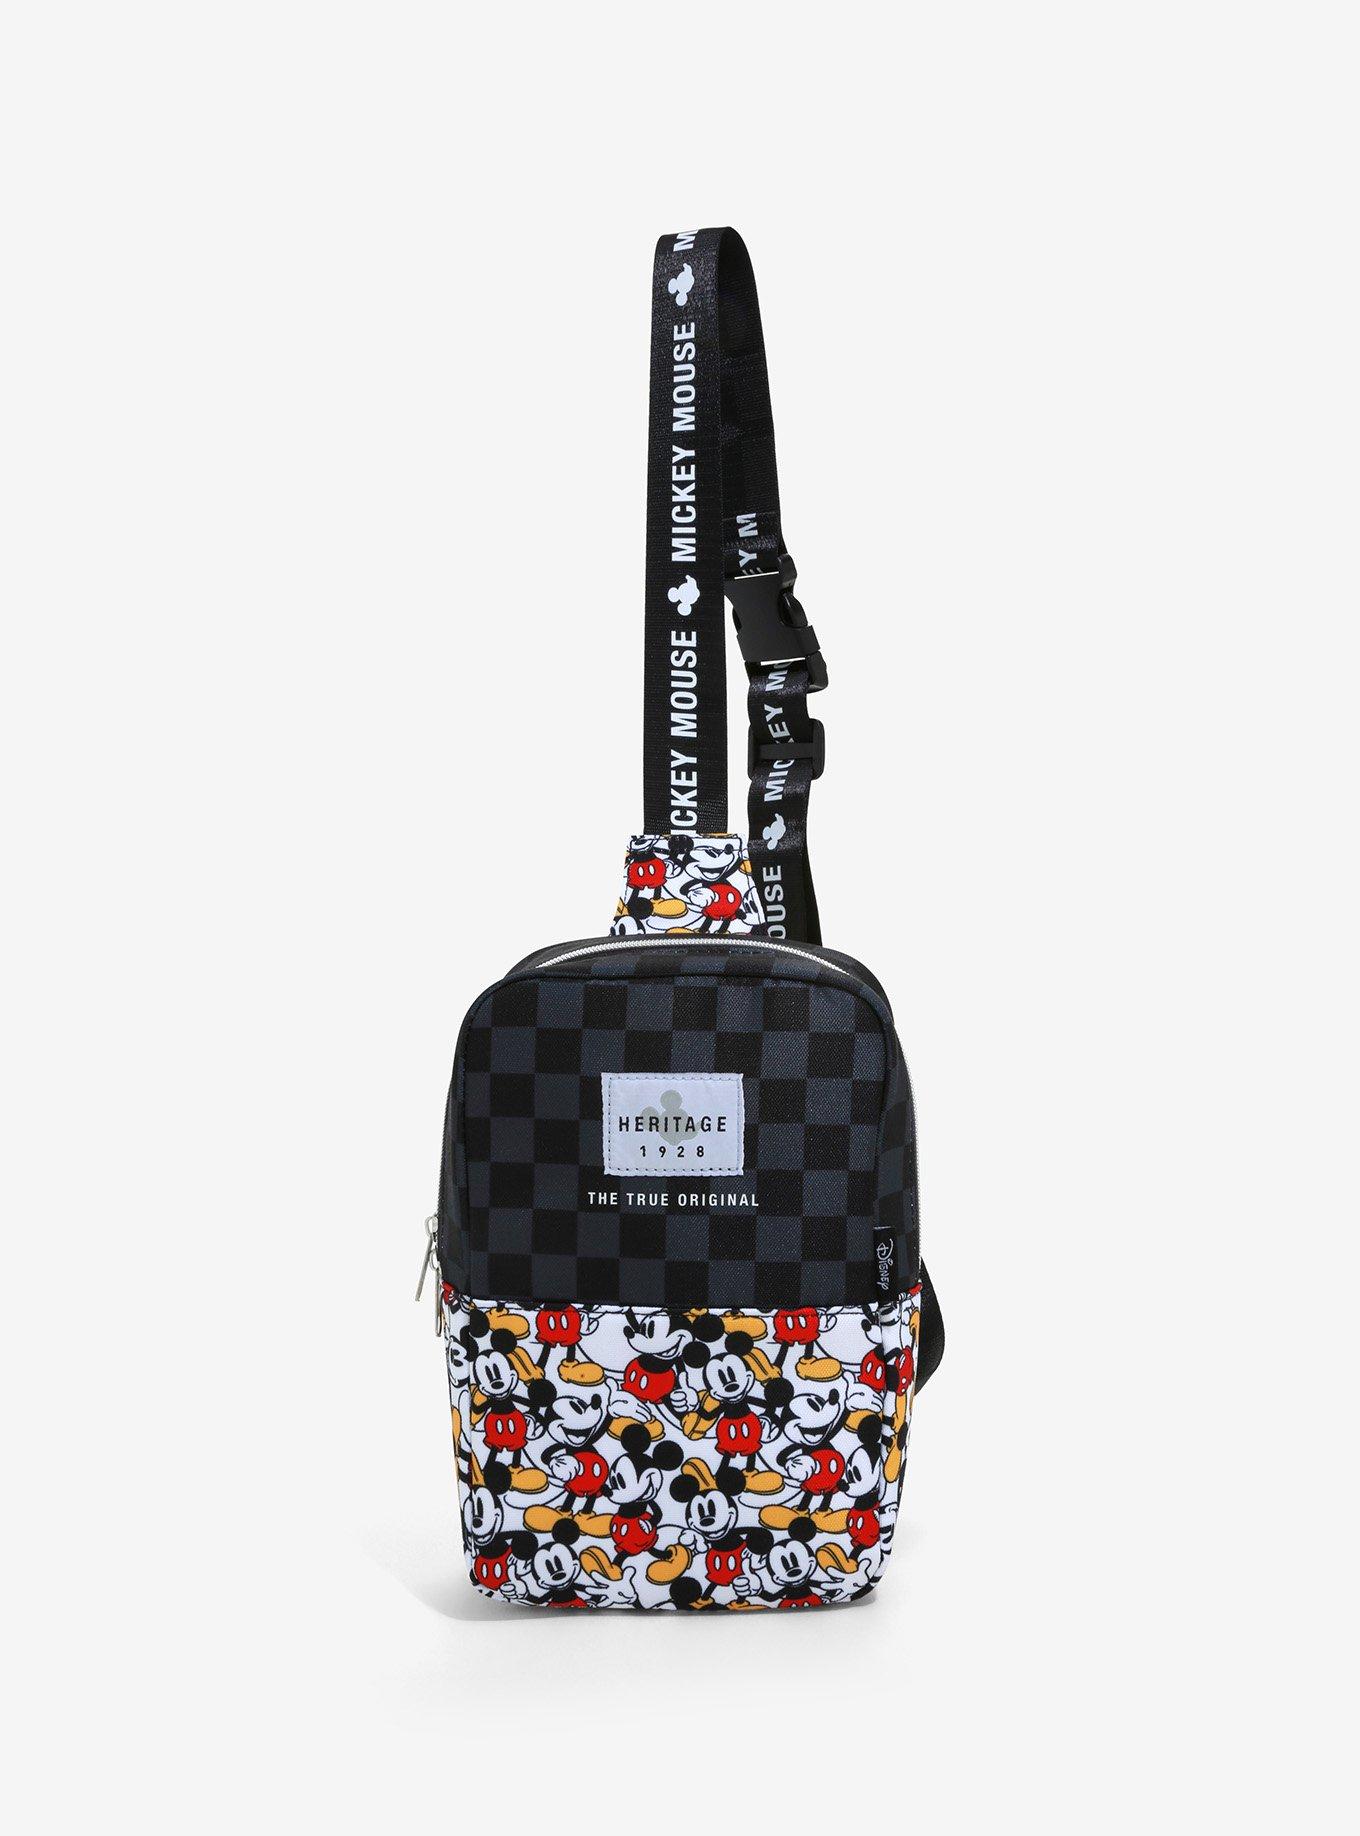 BEST Mickey Mouse Louis Vuitton Shoulder Handbag - Hothot